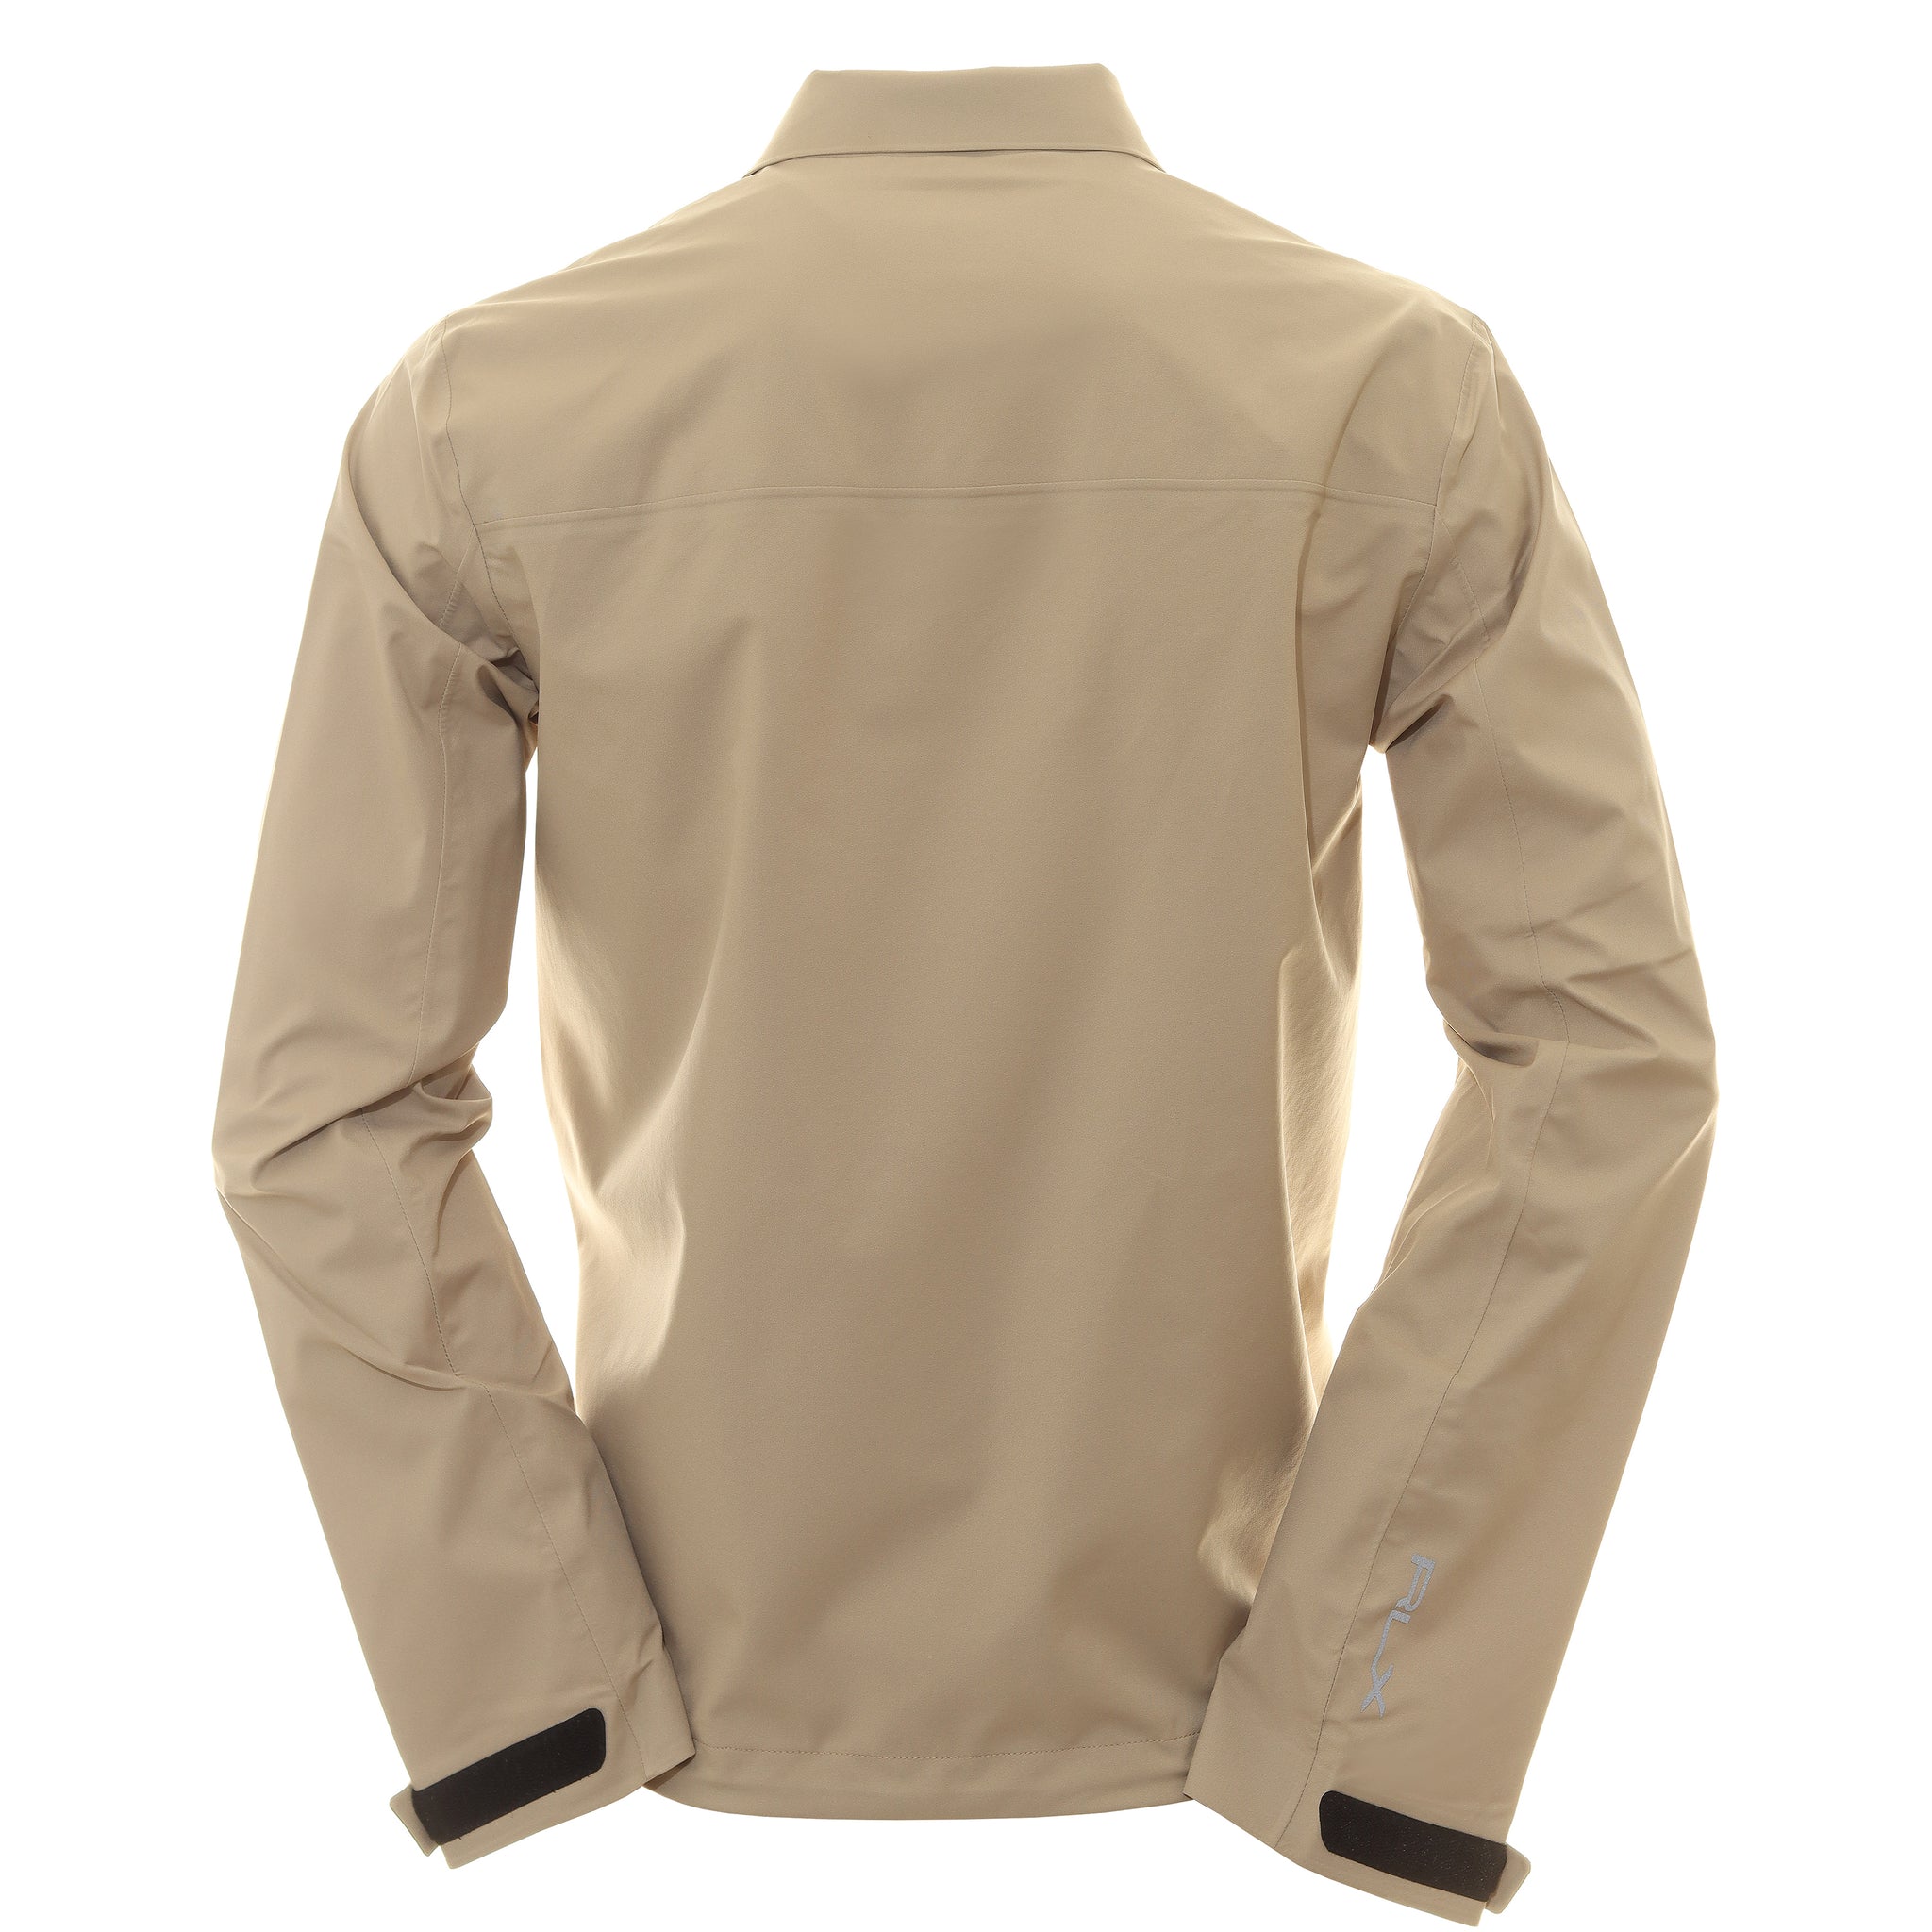 rlx-ralph-lauren-ace-lined-windbreaker-jacket-785915601-classic-khaki-002